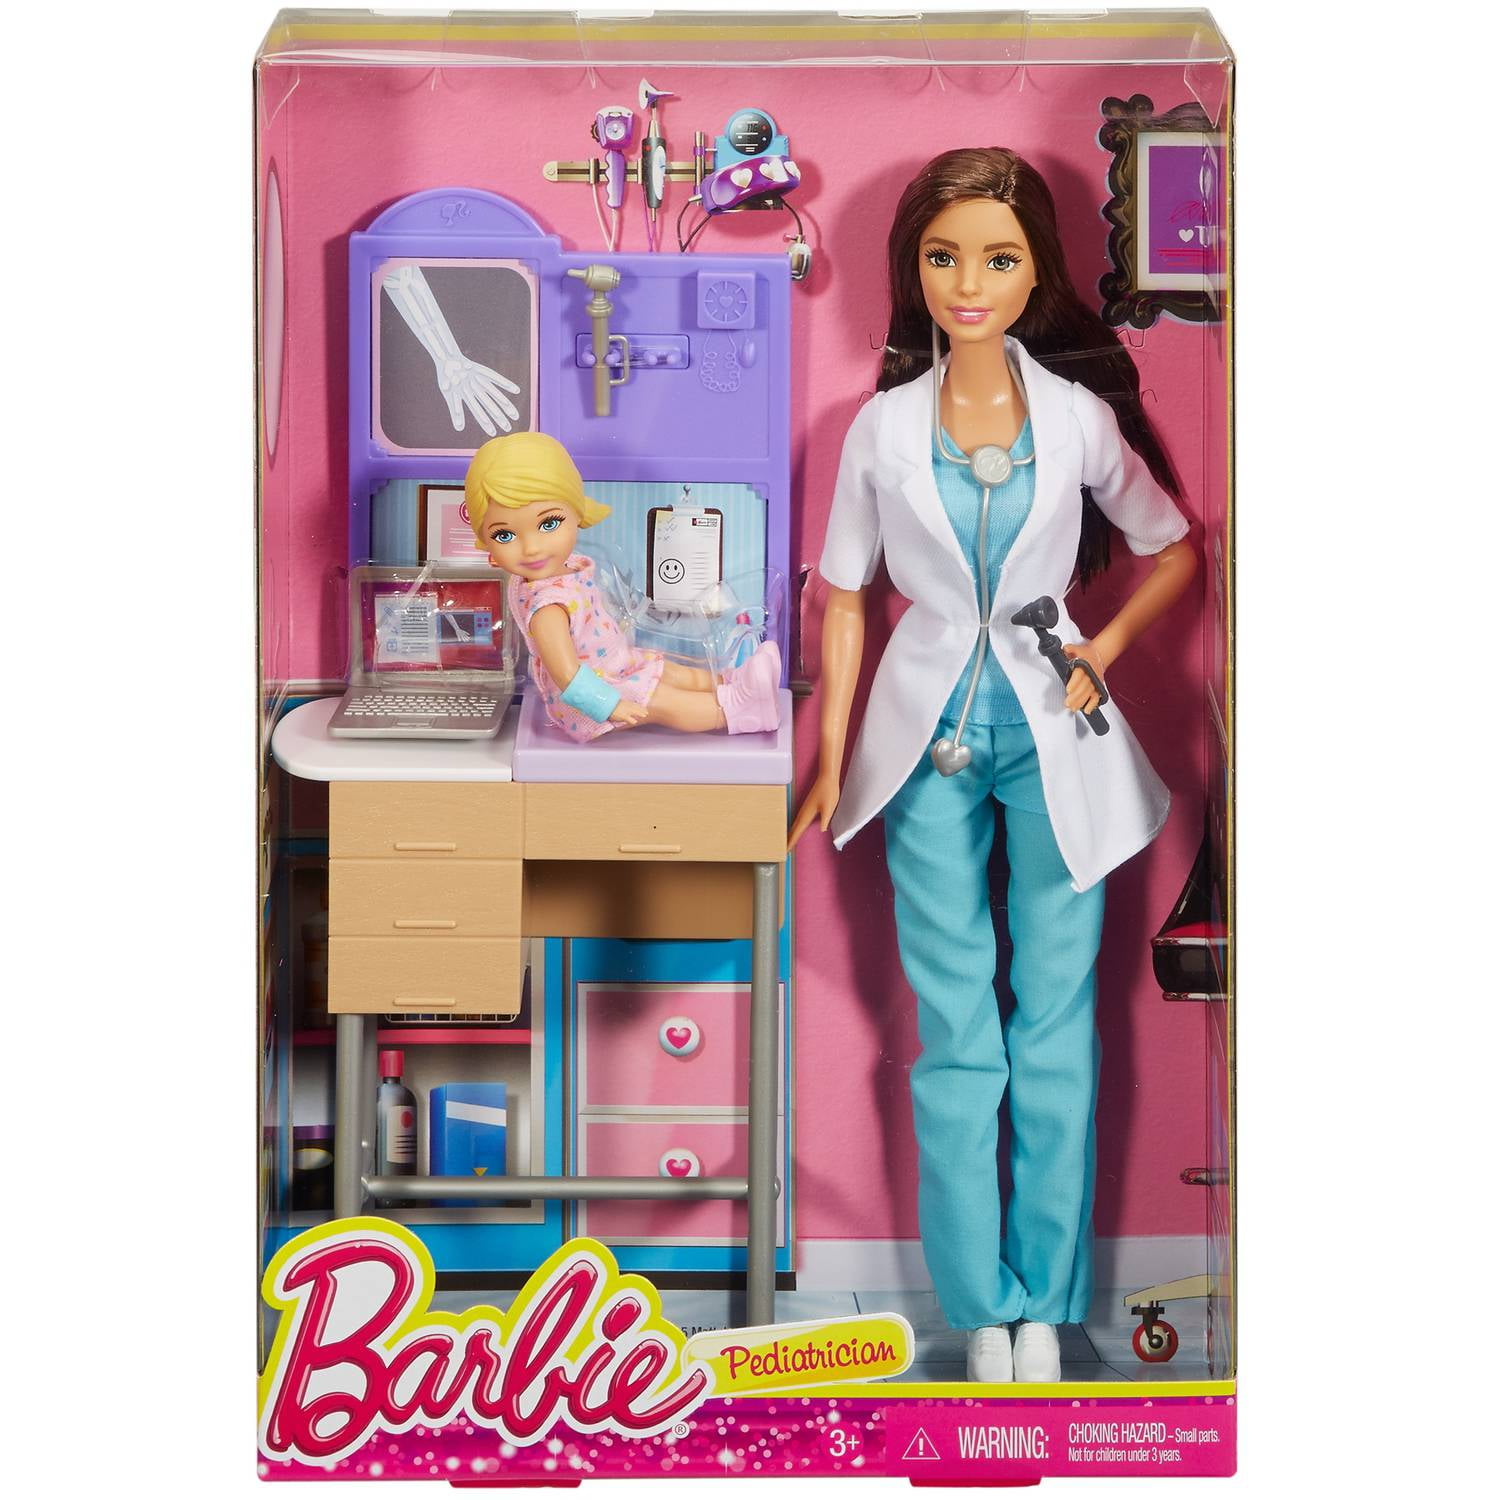 Barbie Careers Pediatrician Playset 